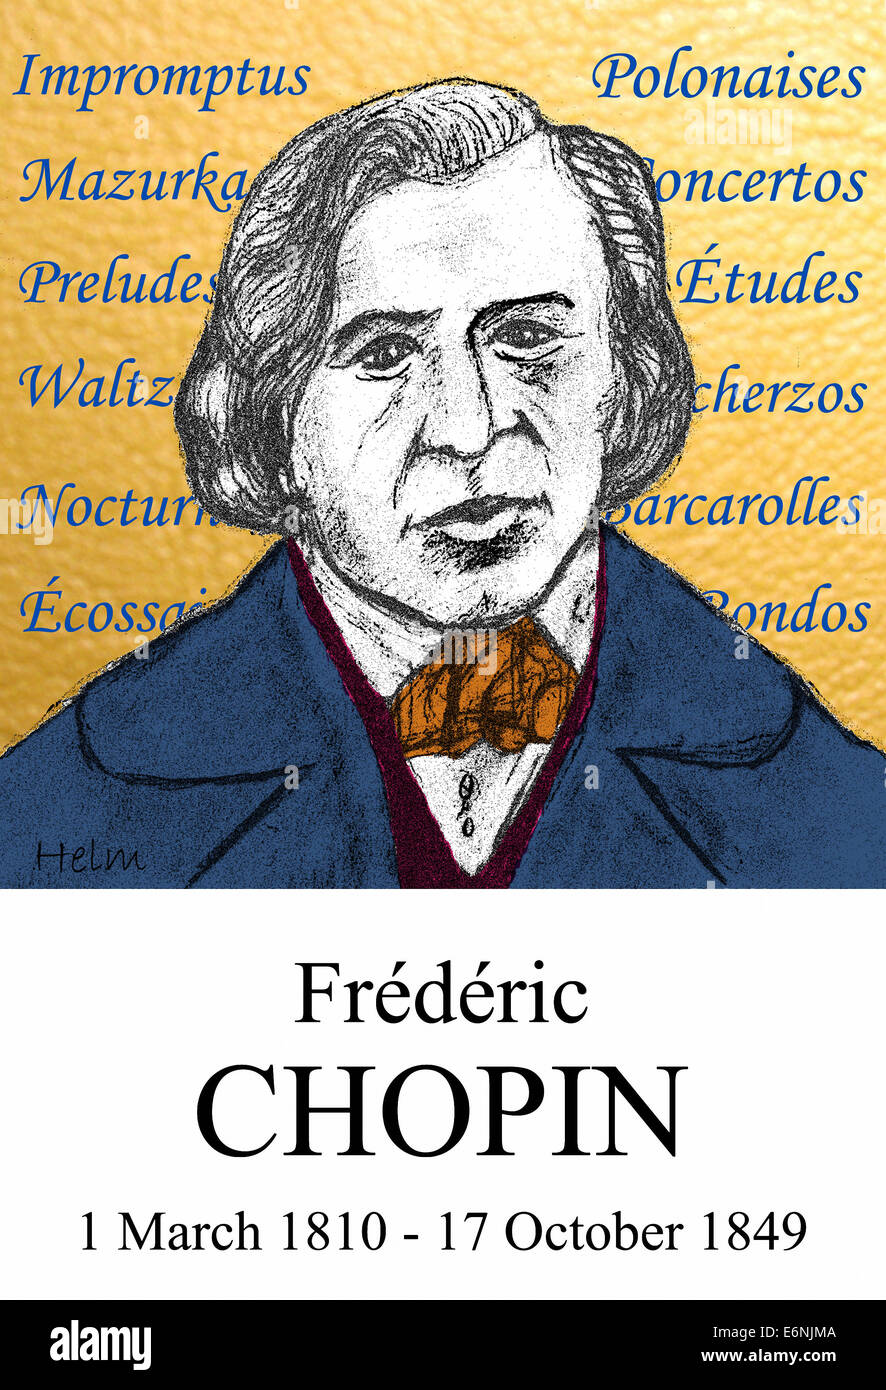 Frederic Chopin, 1810 - 1849, portrait Stock Photo